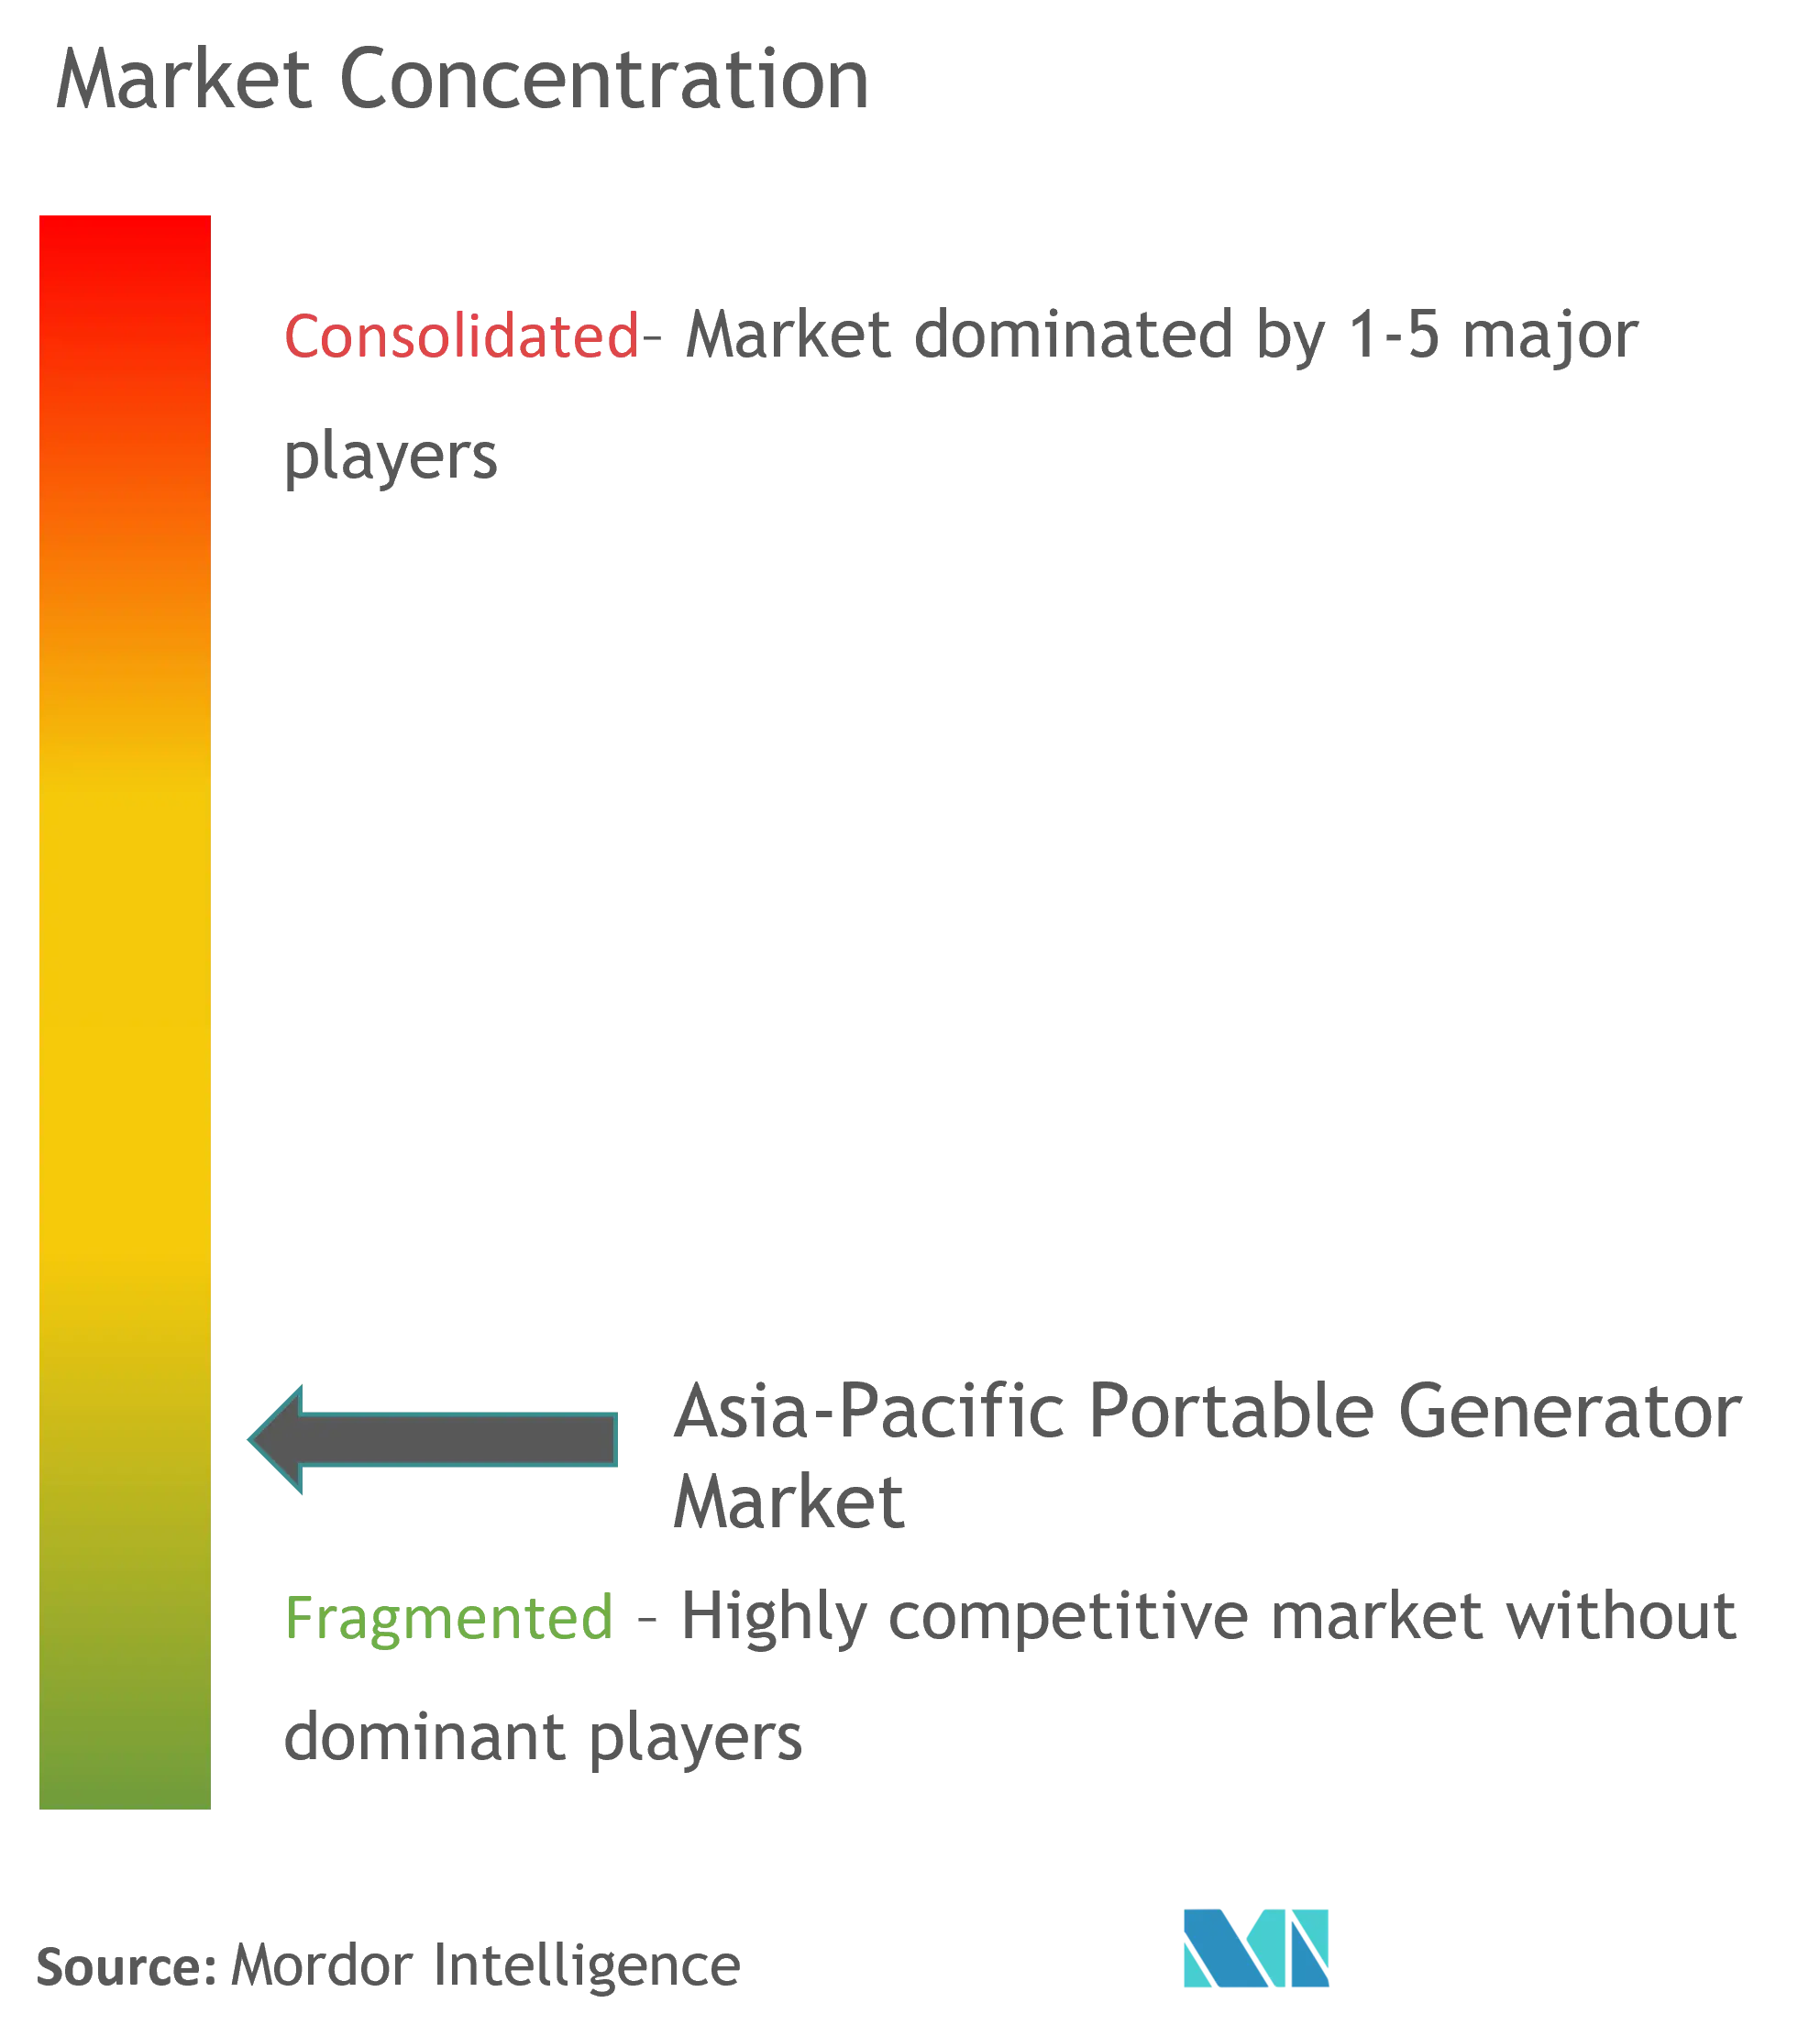 Asia-Pacific Portable Generator Market Concentration 